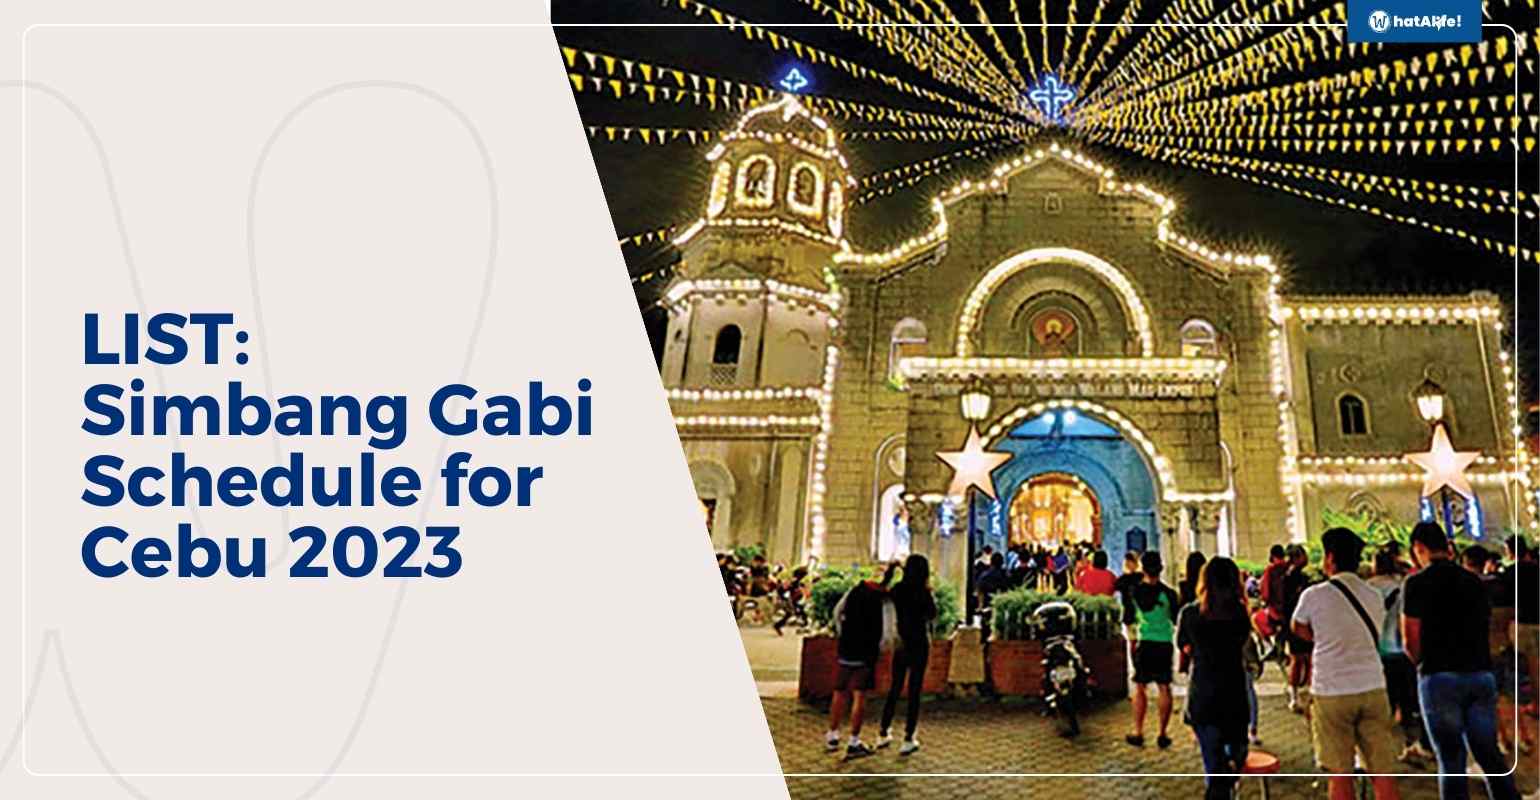 LIST: Simbang Gabi Schedule for Cebu 2023